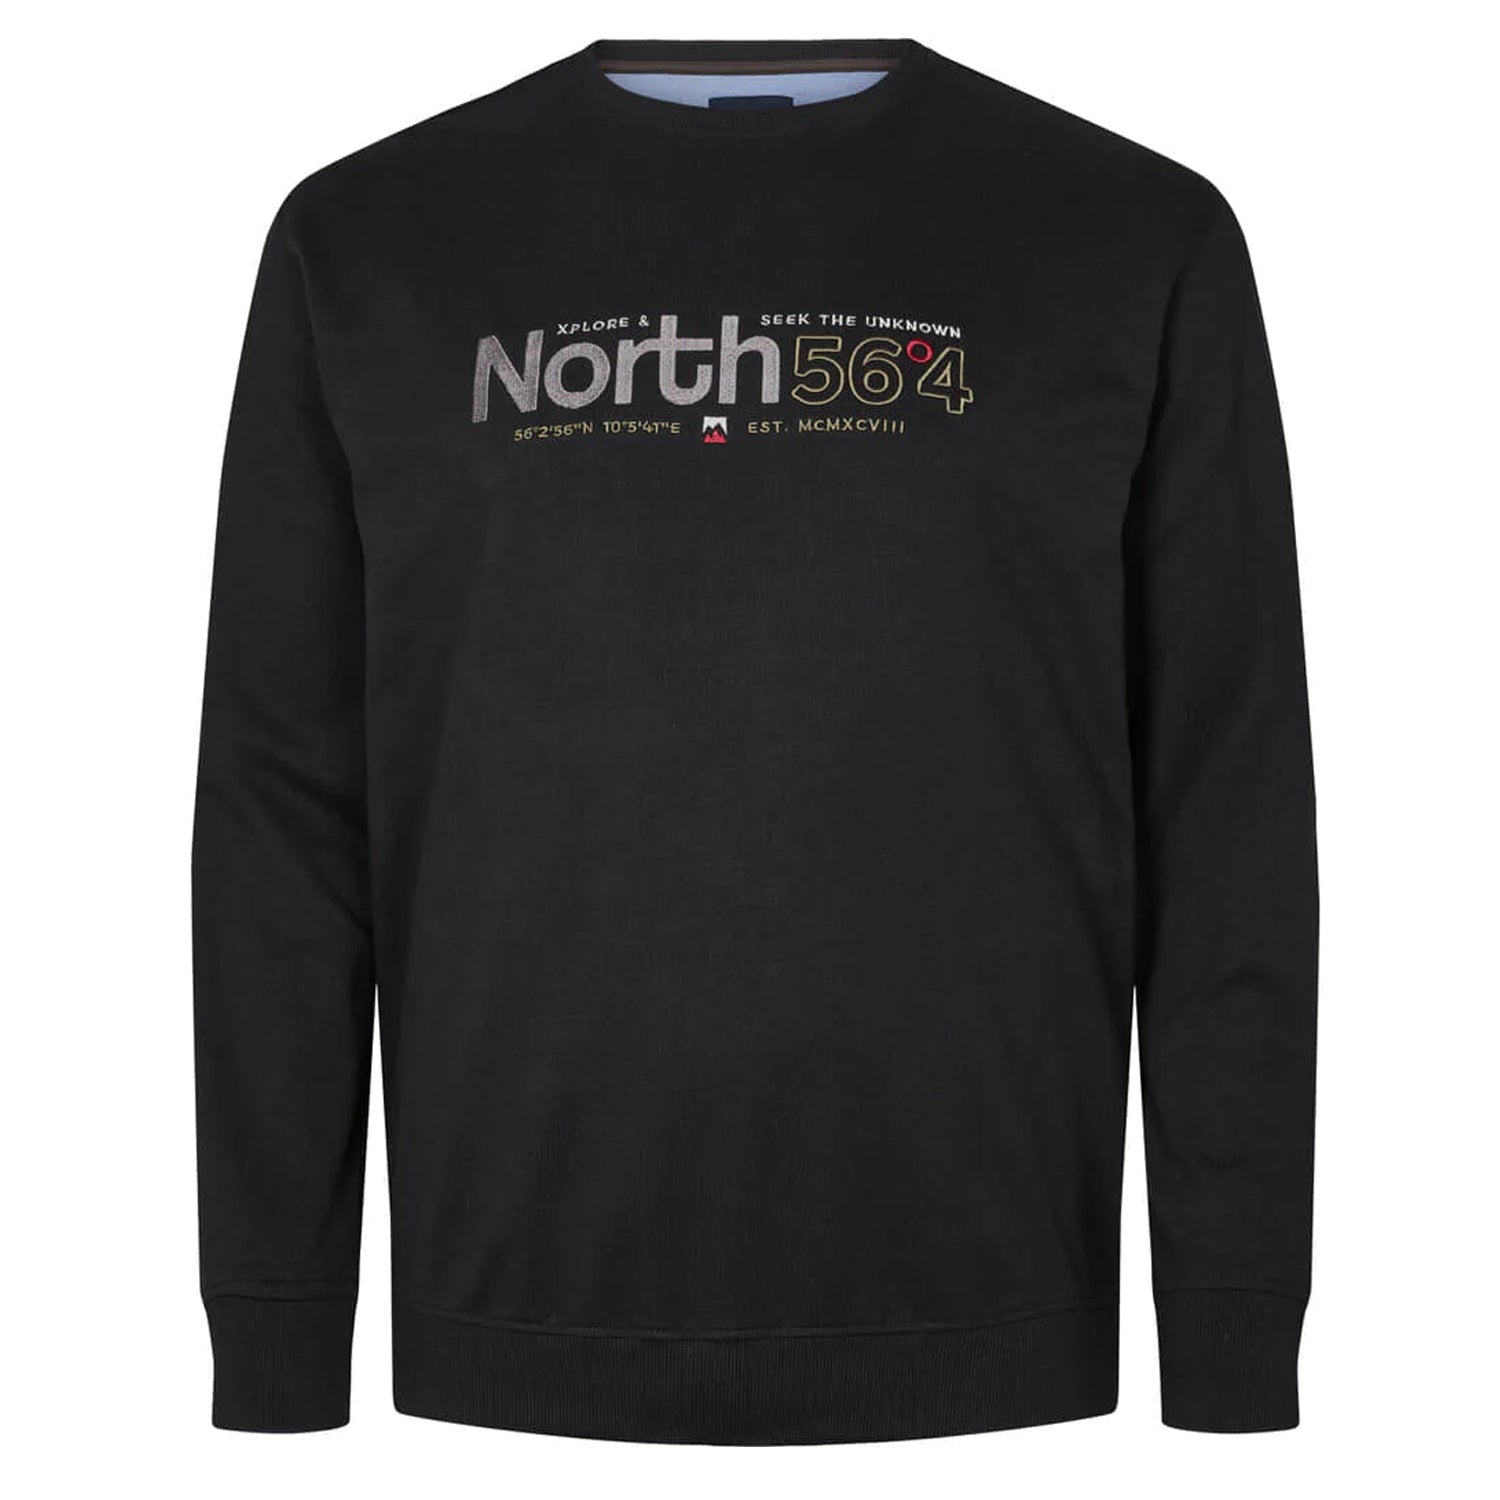 North 56°4 Sweatshirt - 23143 - Black 1